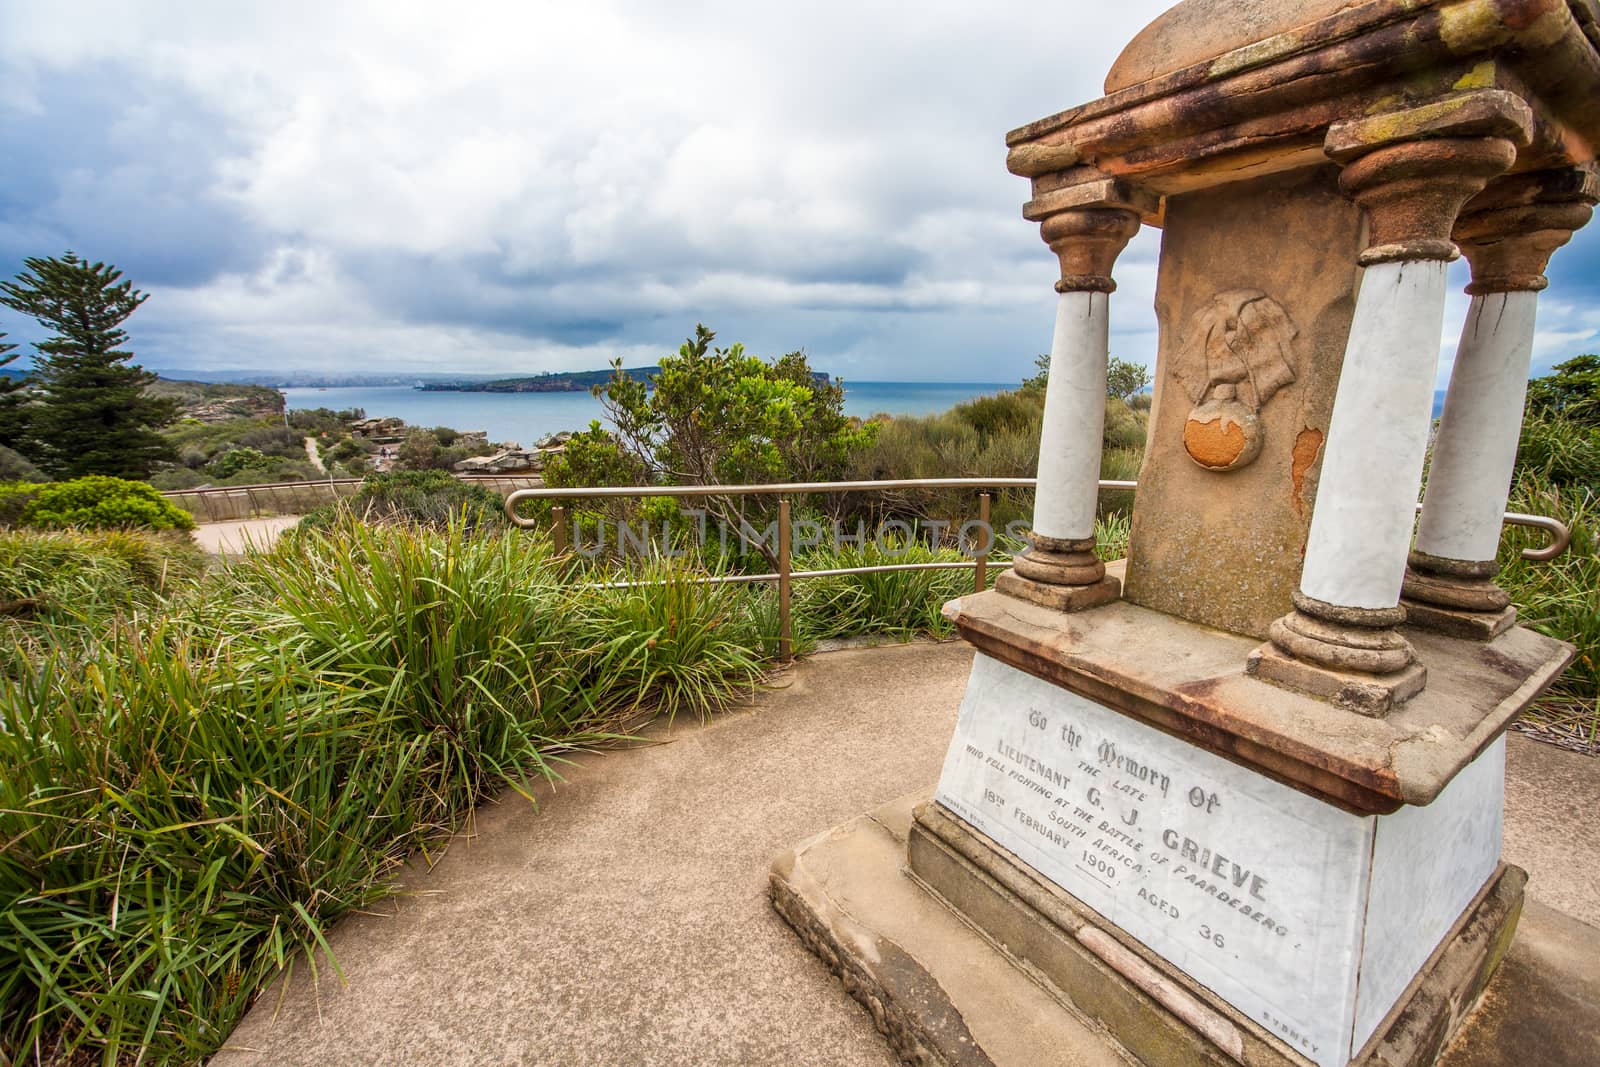 Grieve Memorial at Cap Park Sydney Australia by Makeral